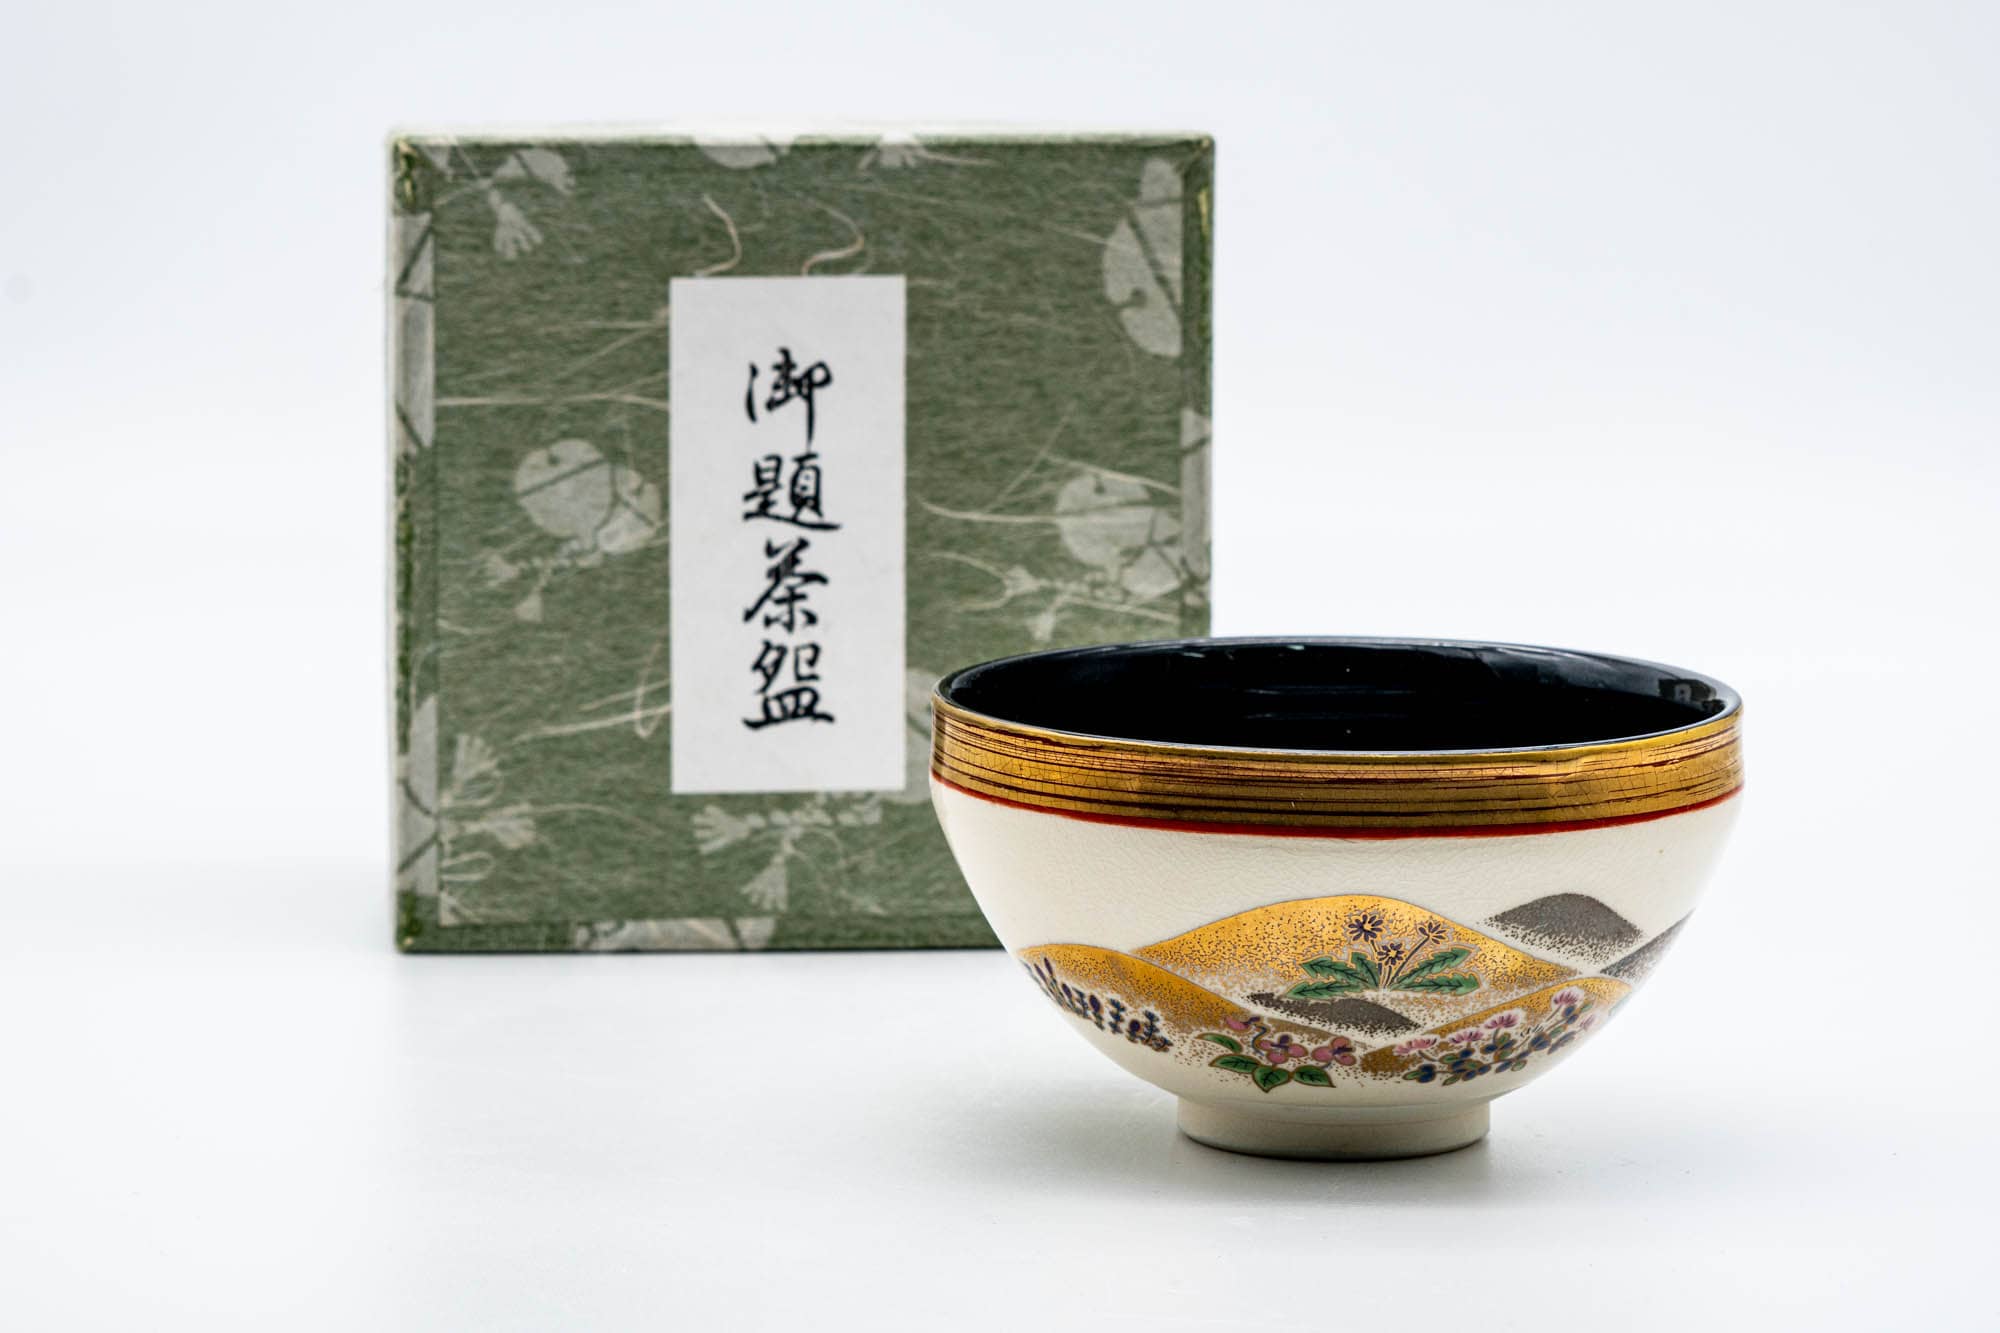 Japanese Matcha Bowl - Floral Gold Mountainous Tenmoku-gata Kyo-yaki Chawan - 200ml